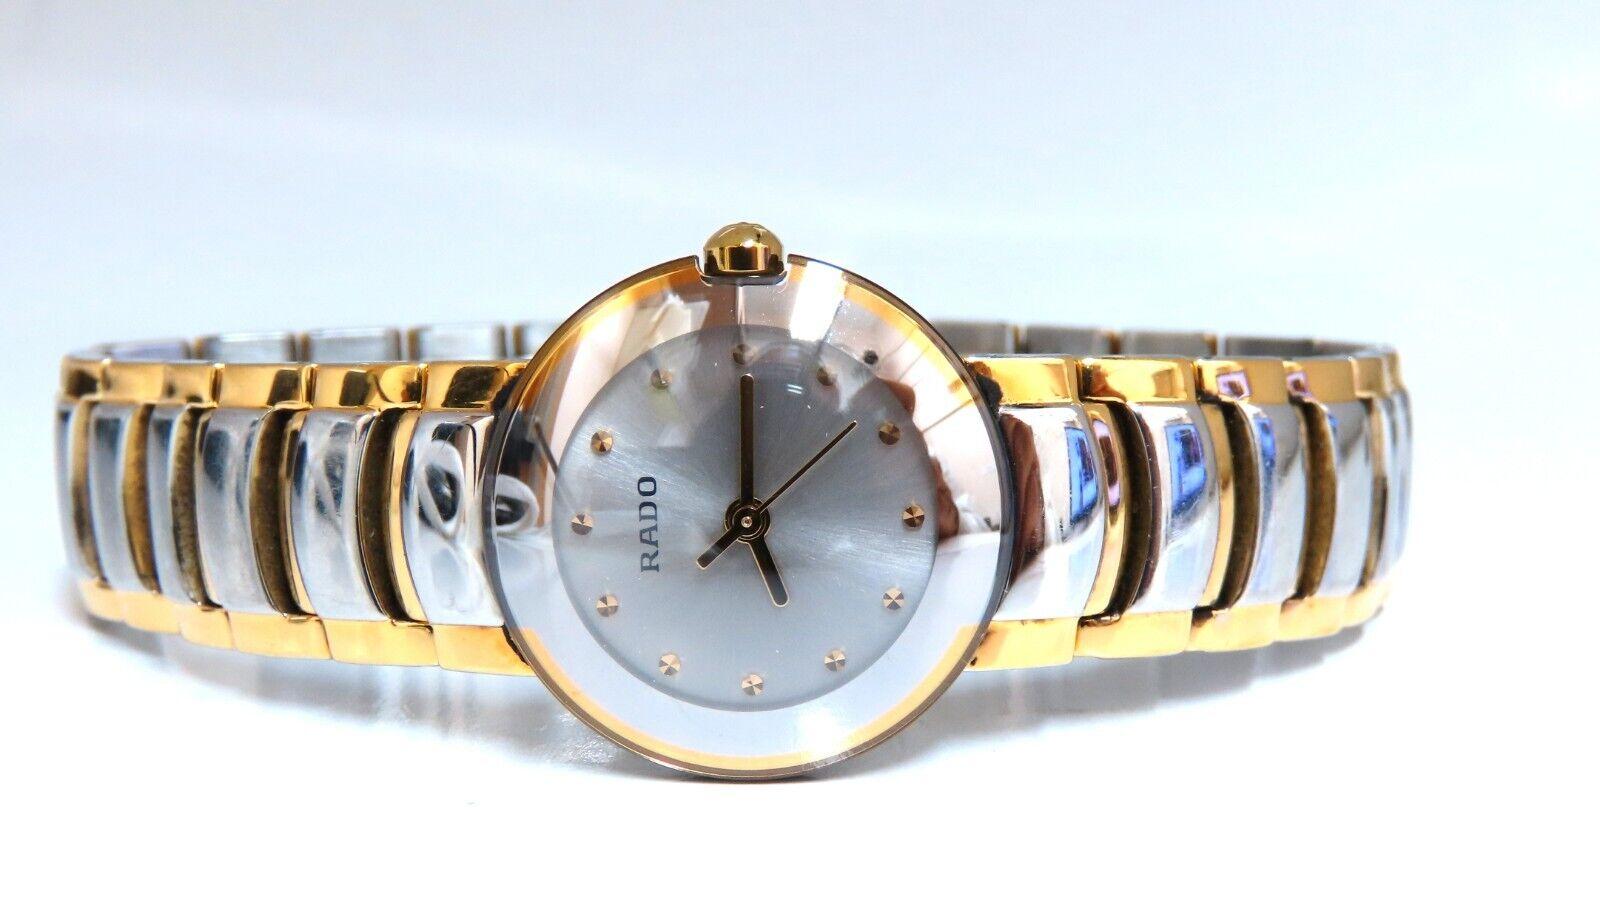 Rado quartz.

7 inch bracelet.

24mm dial

Fair condition.

Working order.